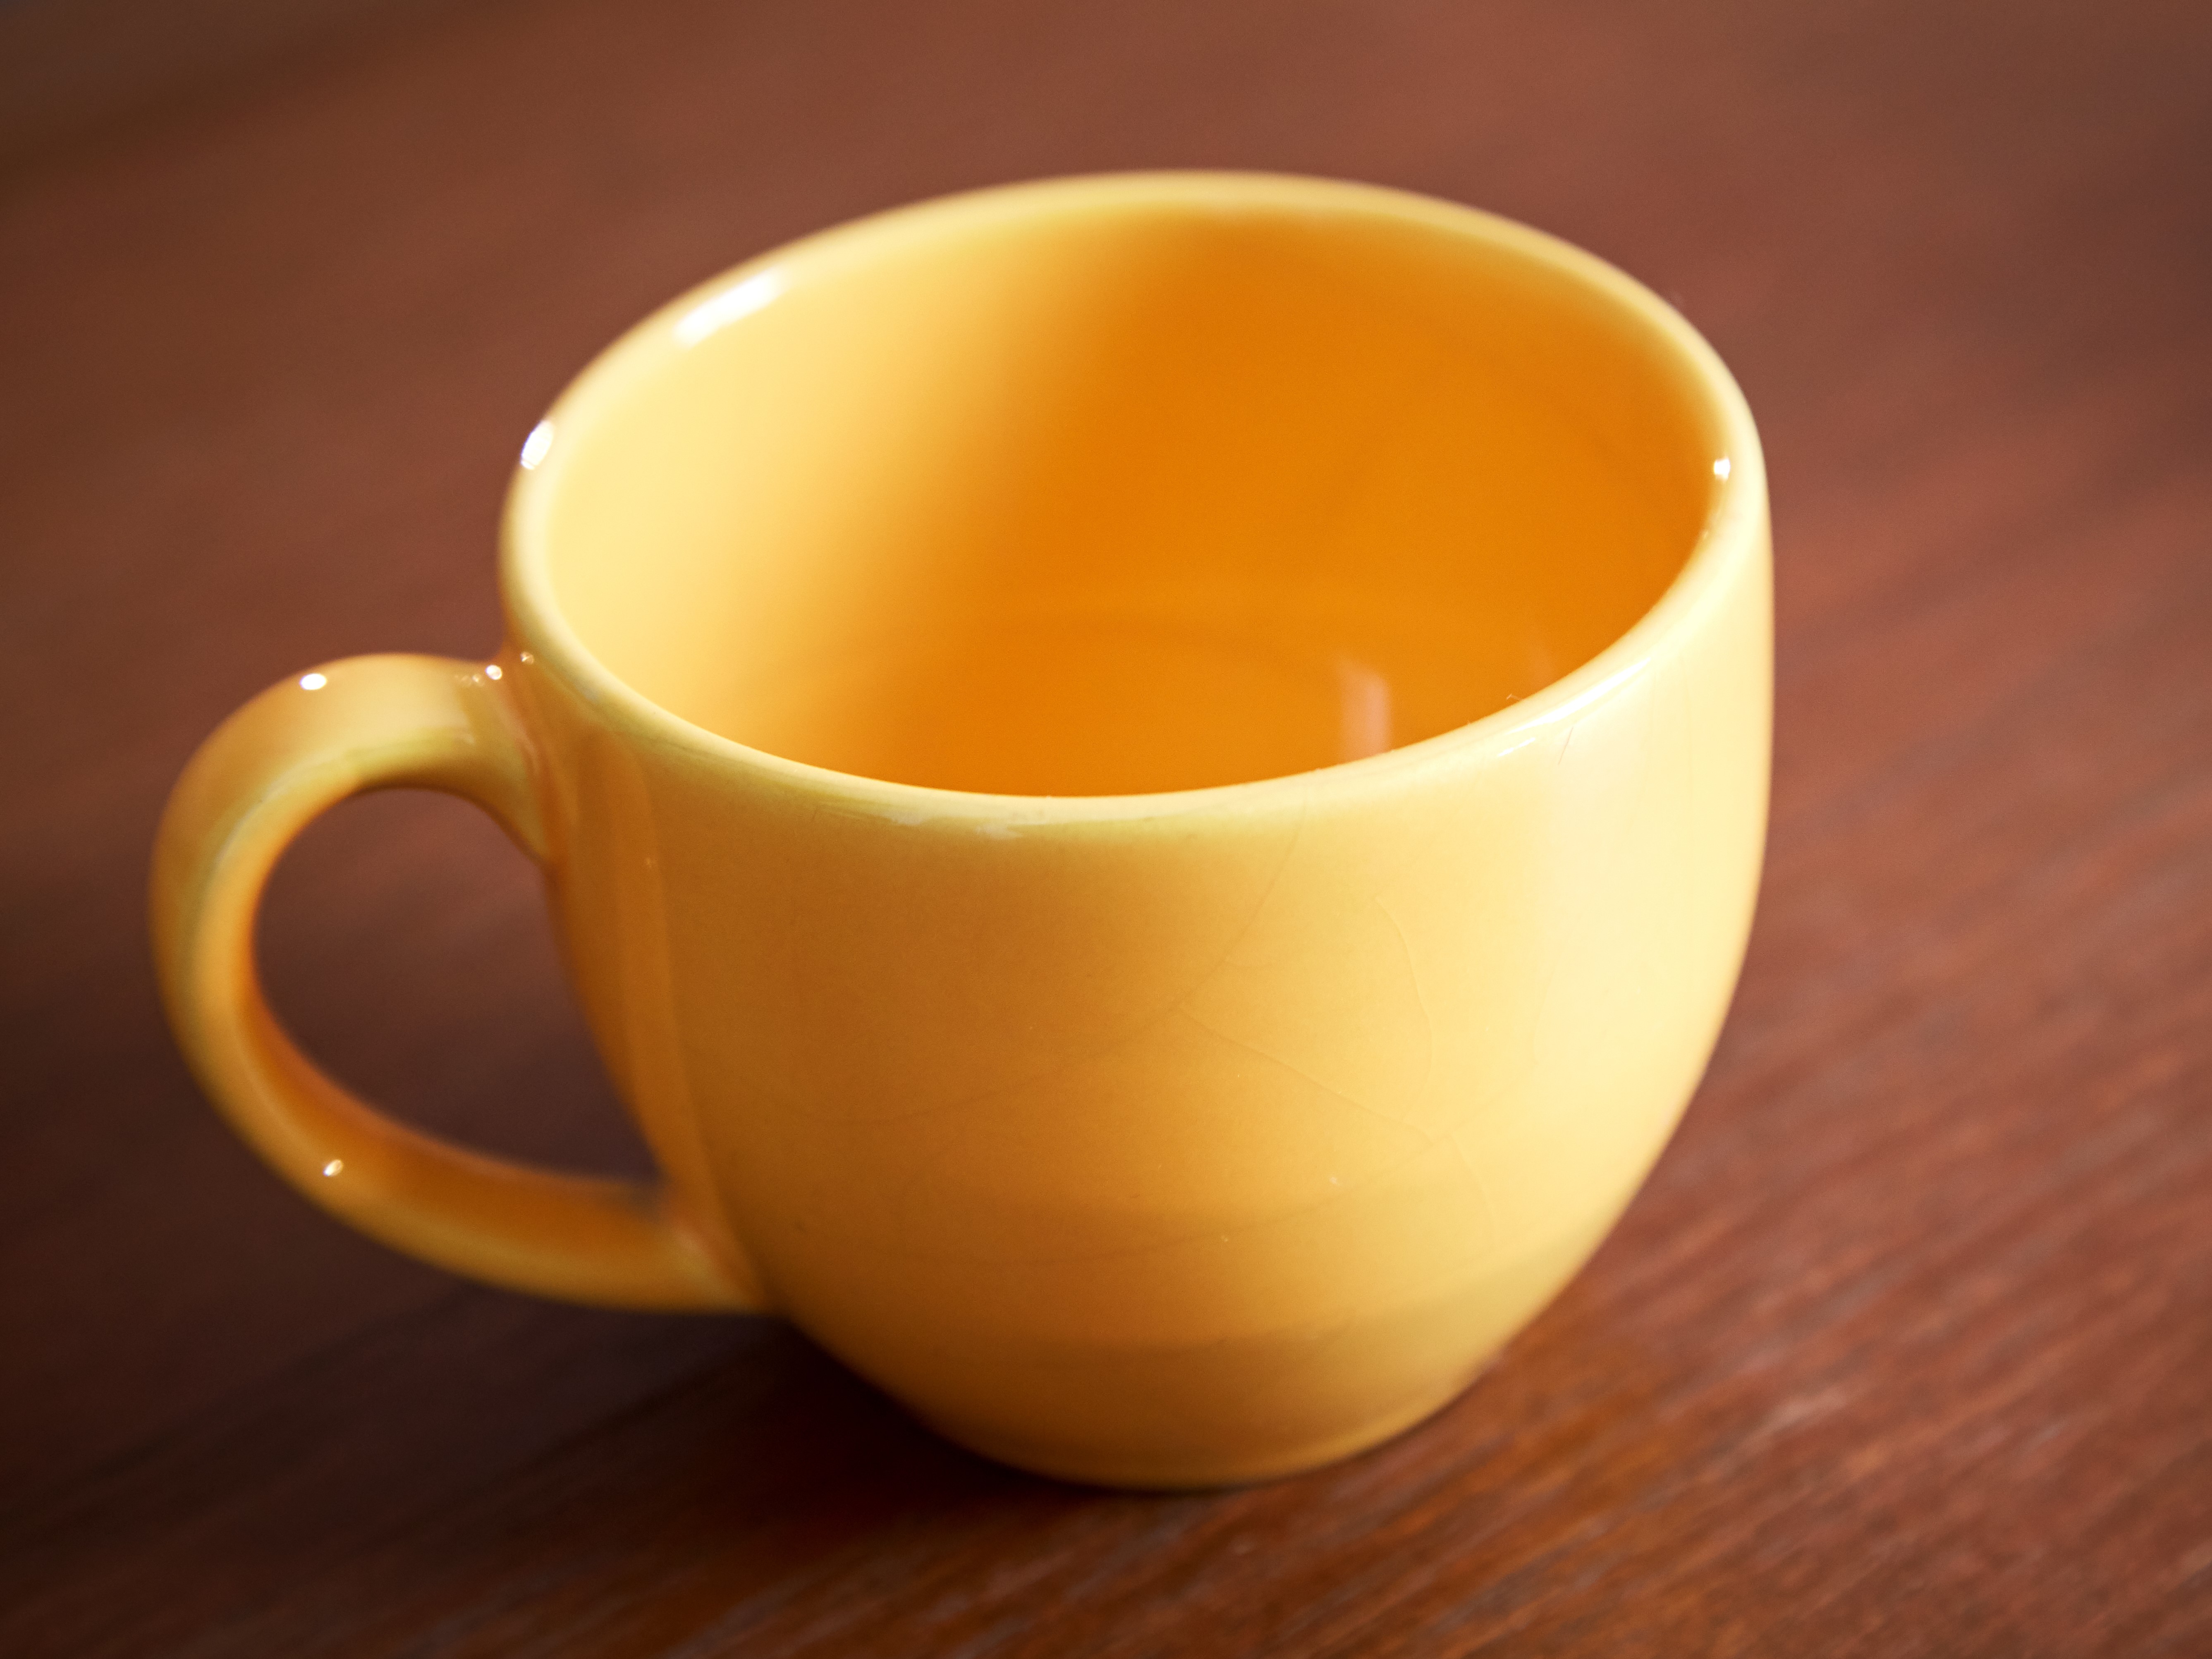 yellow, ceramic mug on wooden table